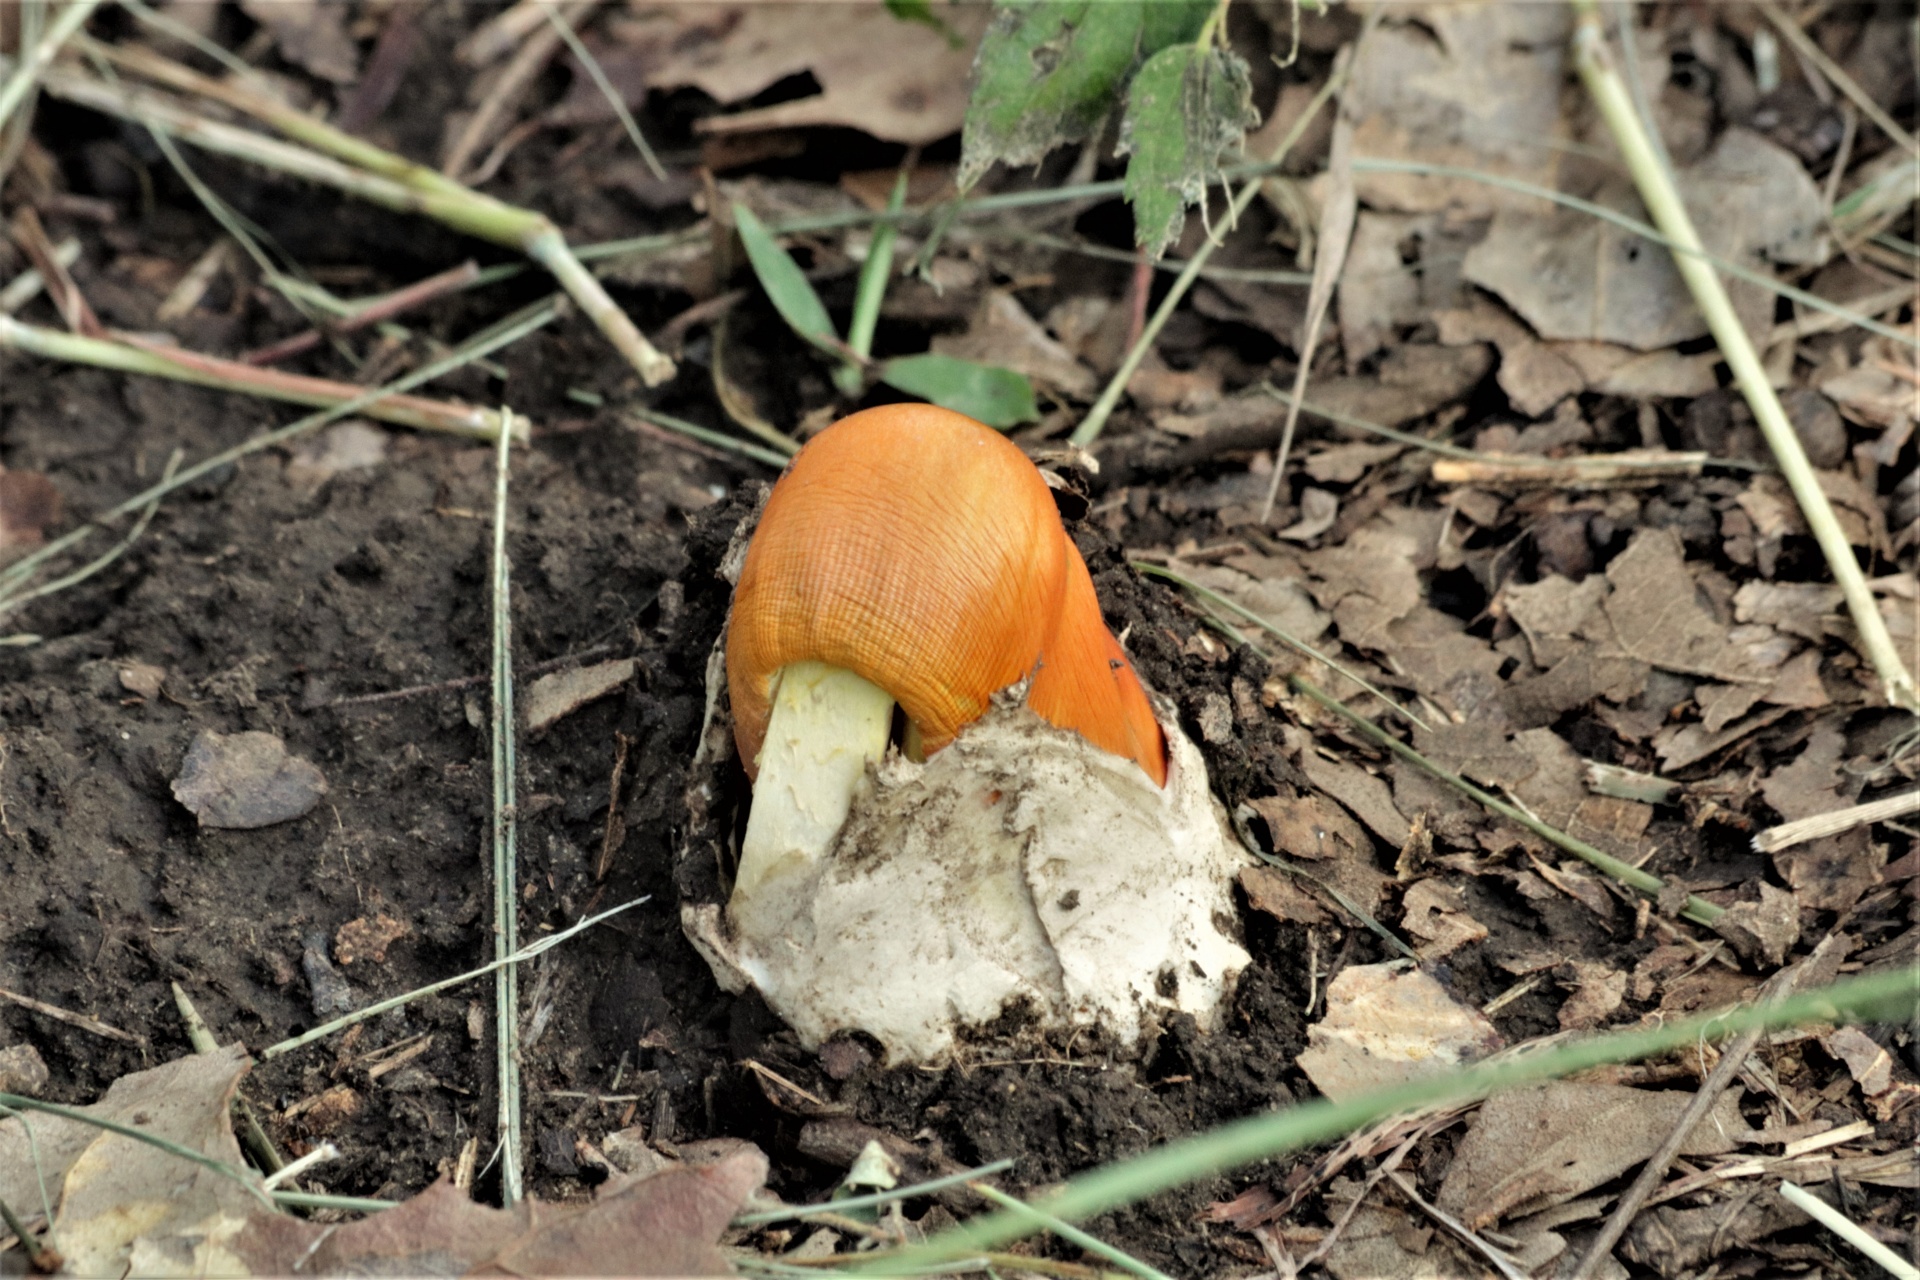 Close-up of an orange Amanita jackson mushroom emerging from its white volva.